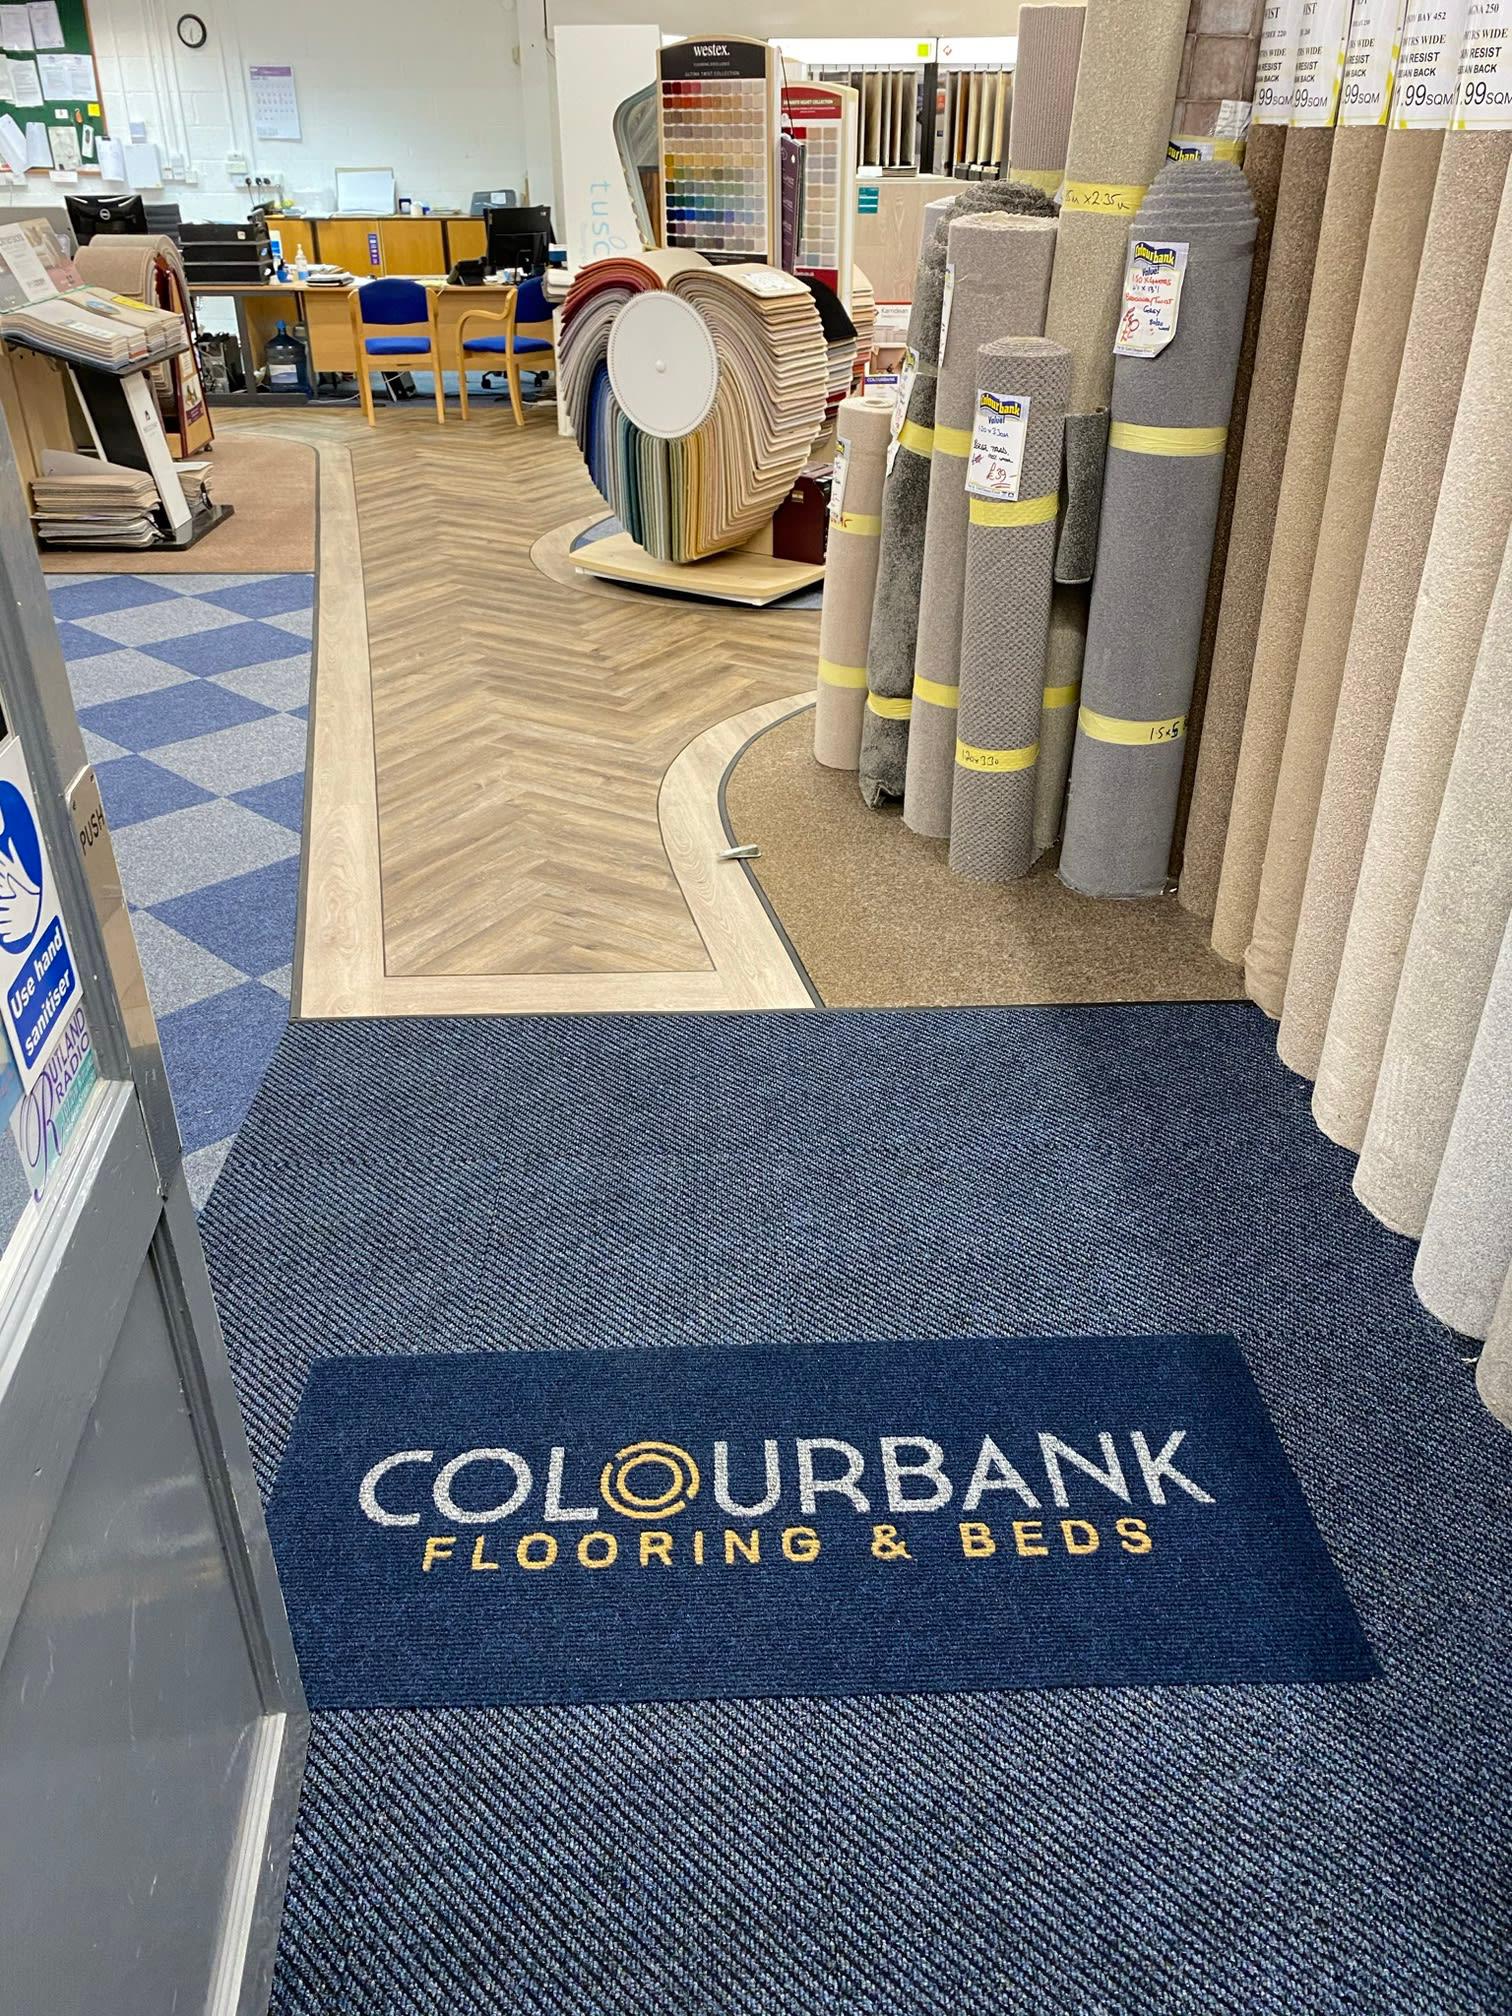 Images Colourbank Carpets & Beds